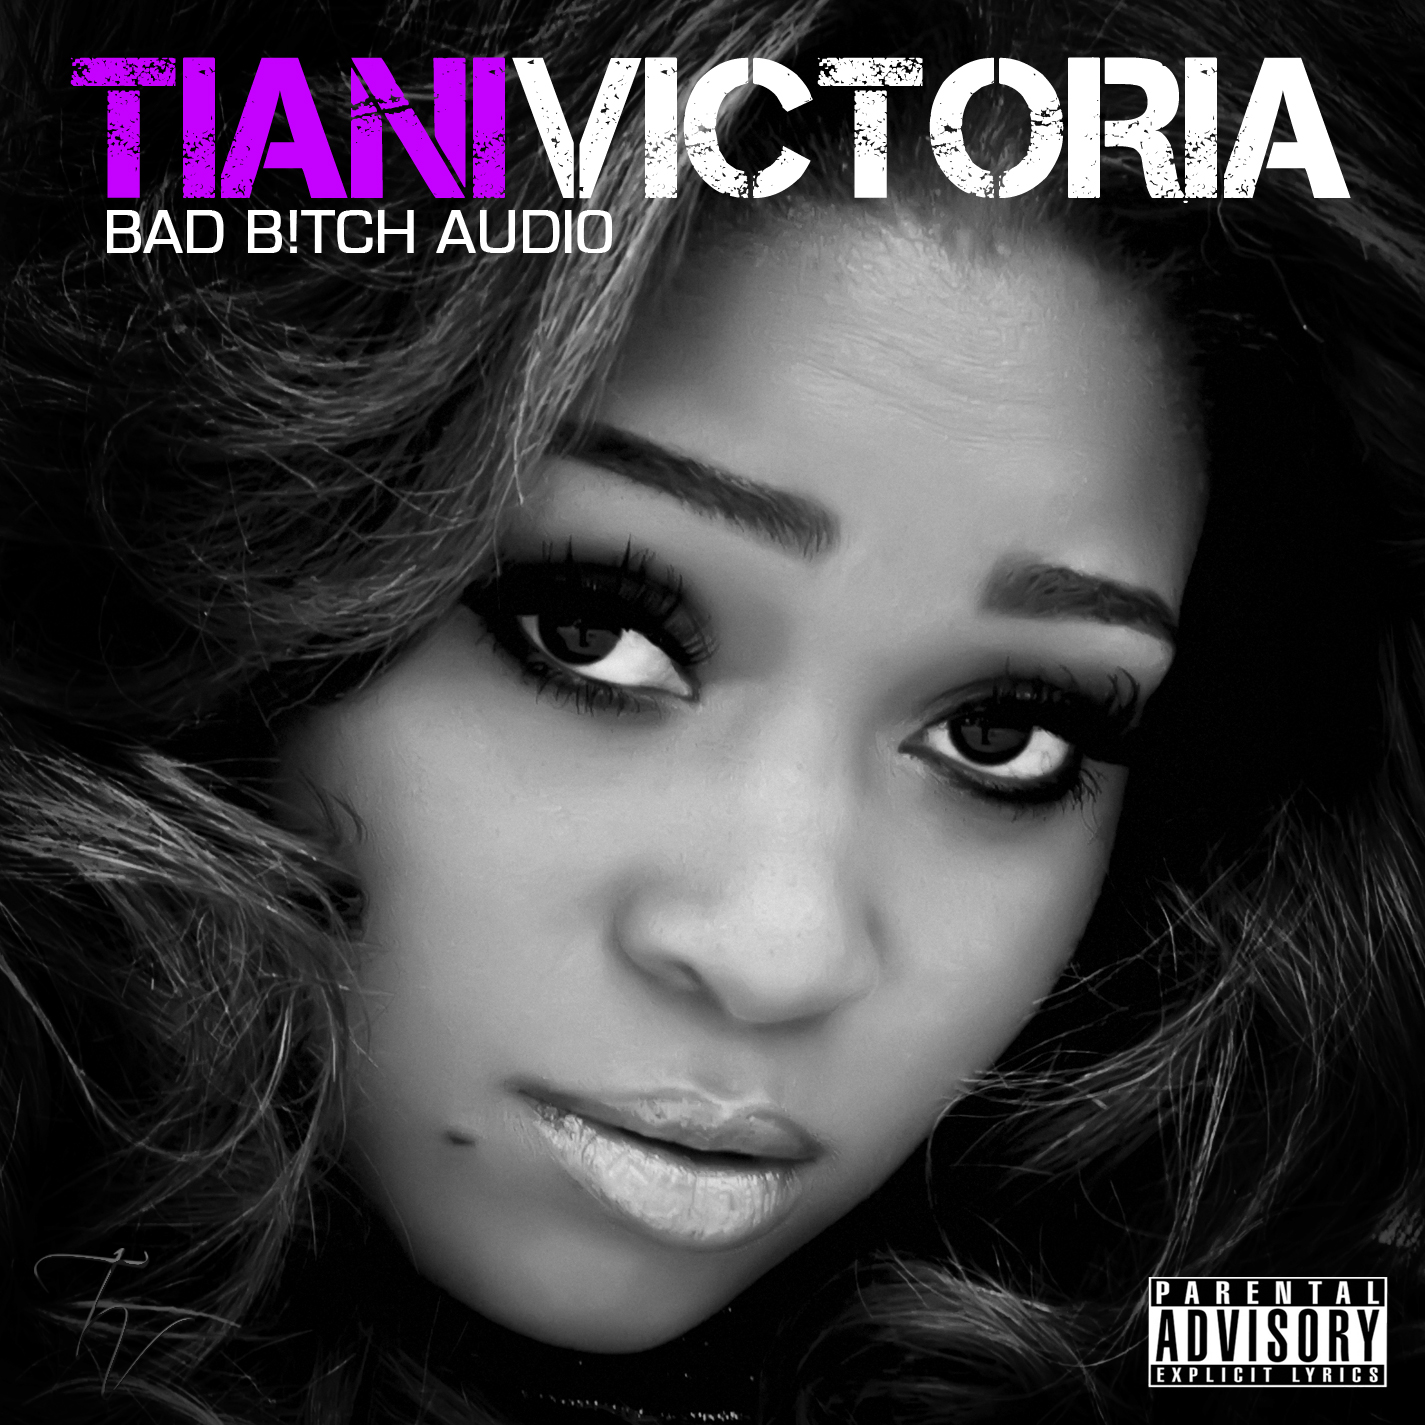 TV-BBA1 Exclusive: Tiani Victoria (@TianiVictoria) - Scream (Video) Dir: @Recthedirector #BADBITCHAUDIO  